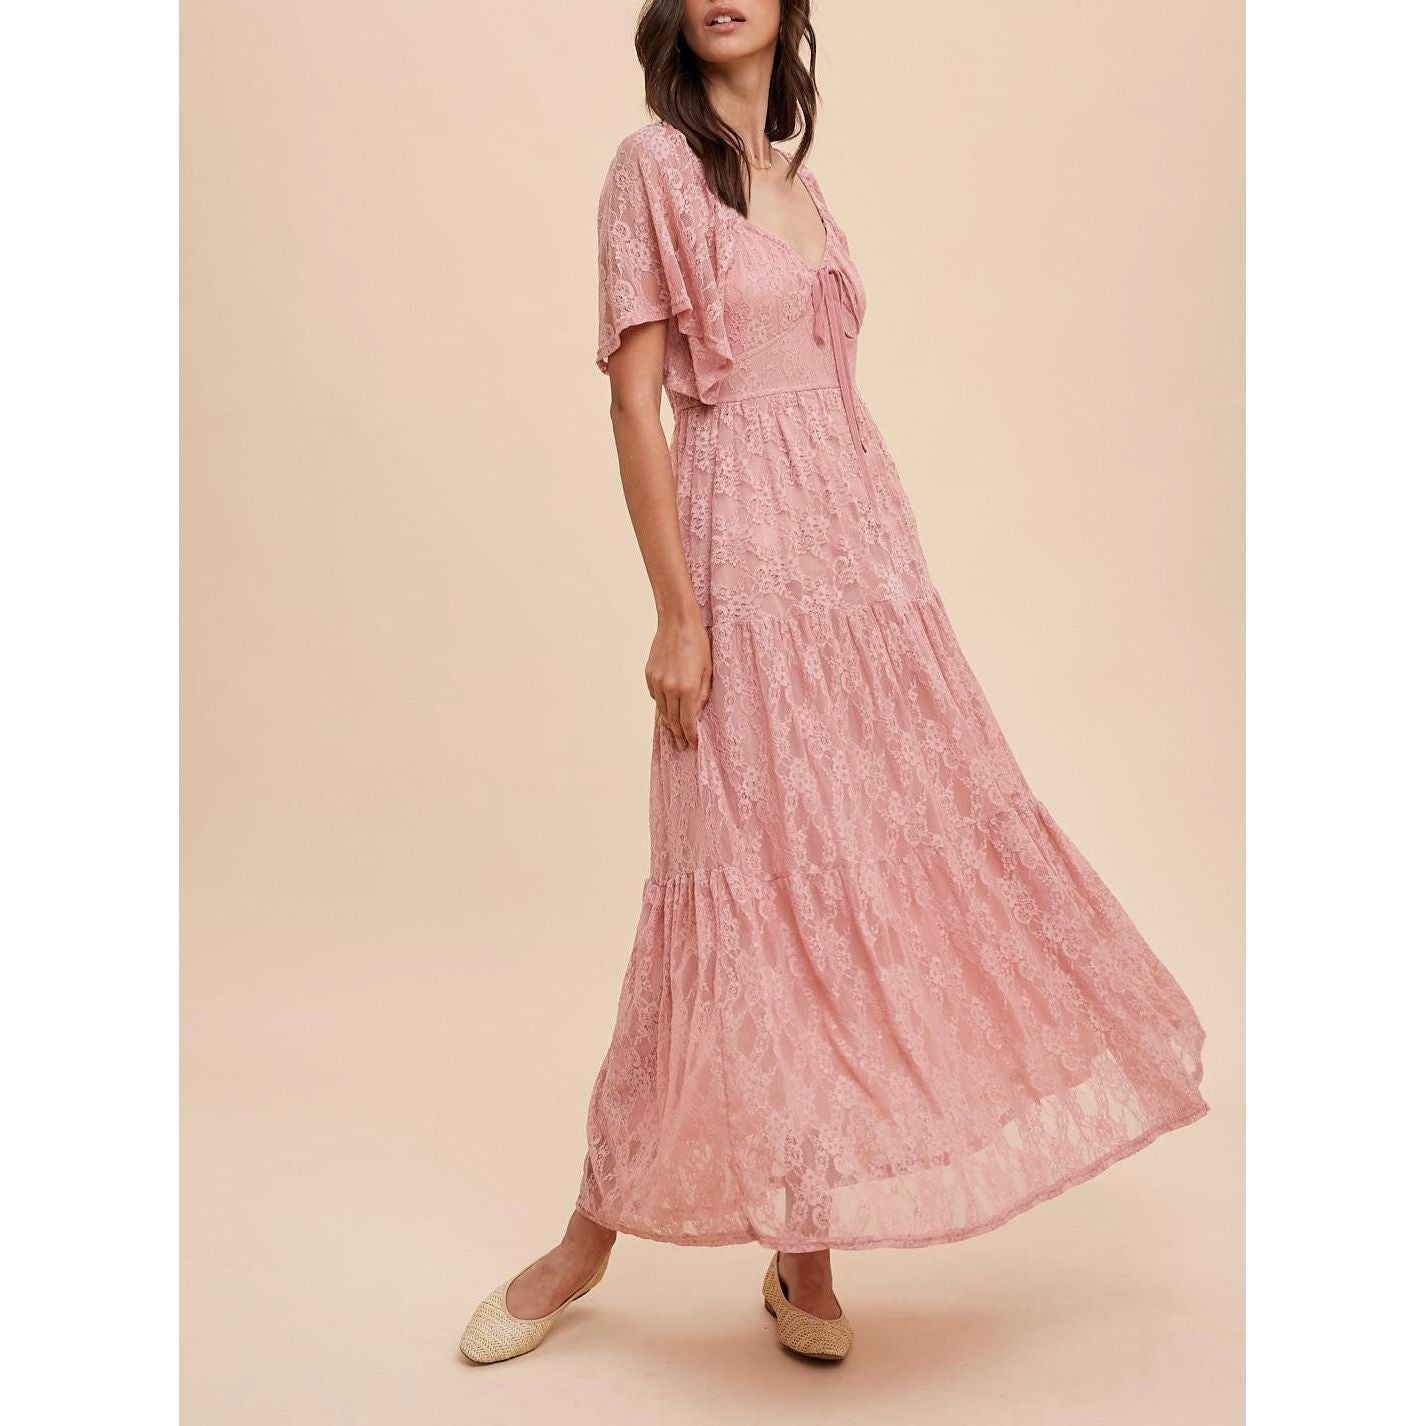 Aspen Pink Lace Dress